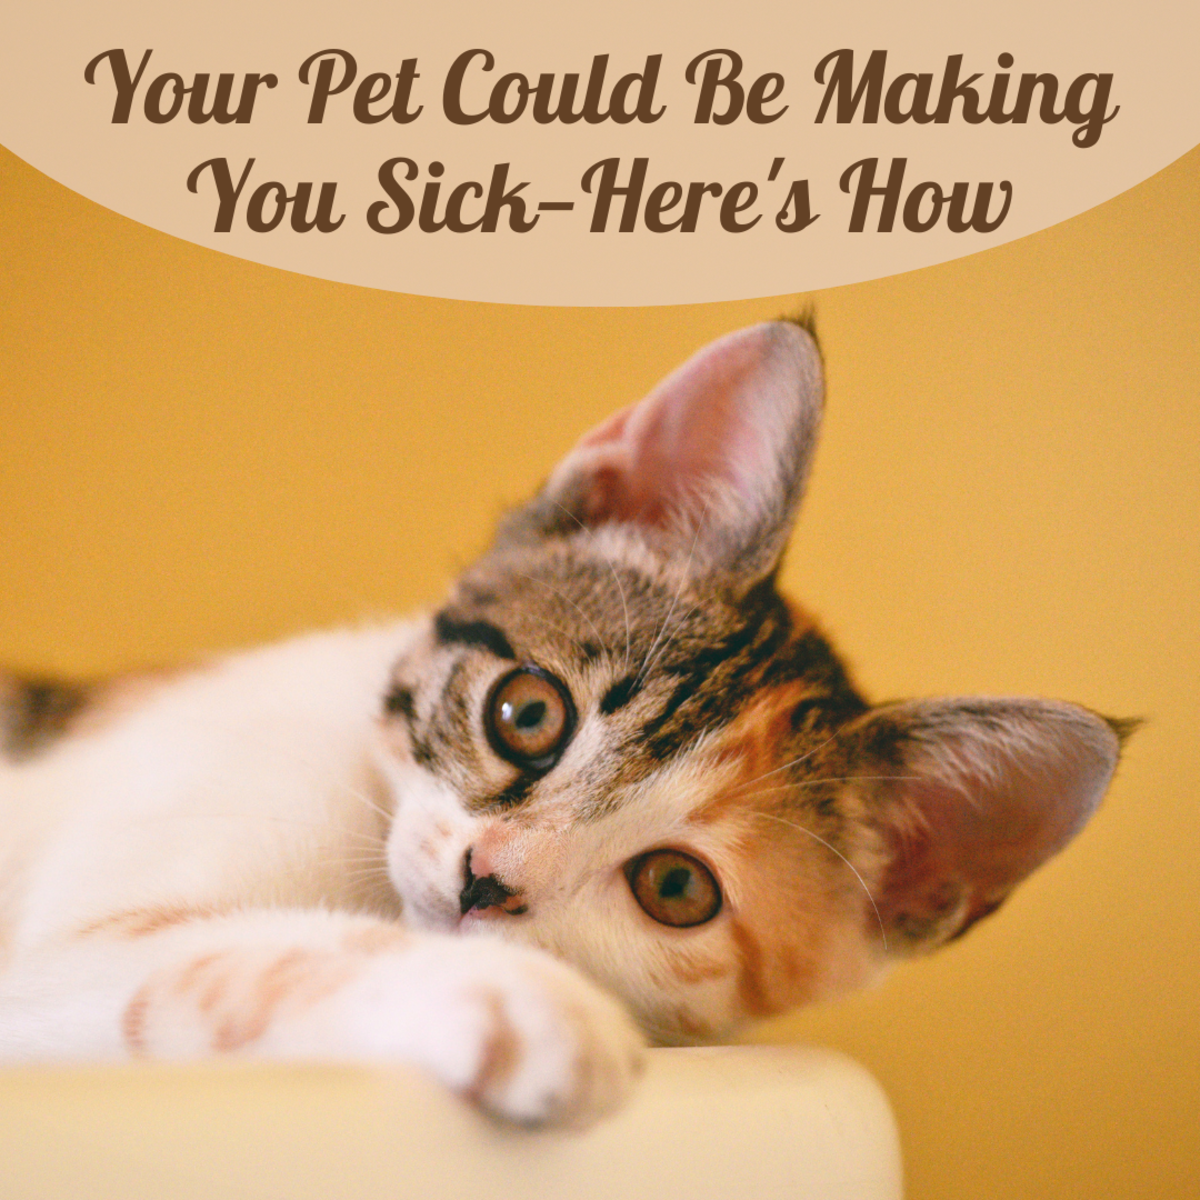 Can Pets Make You Sick?